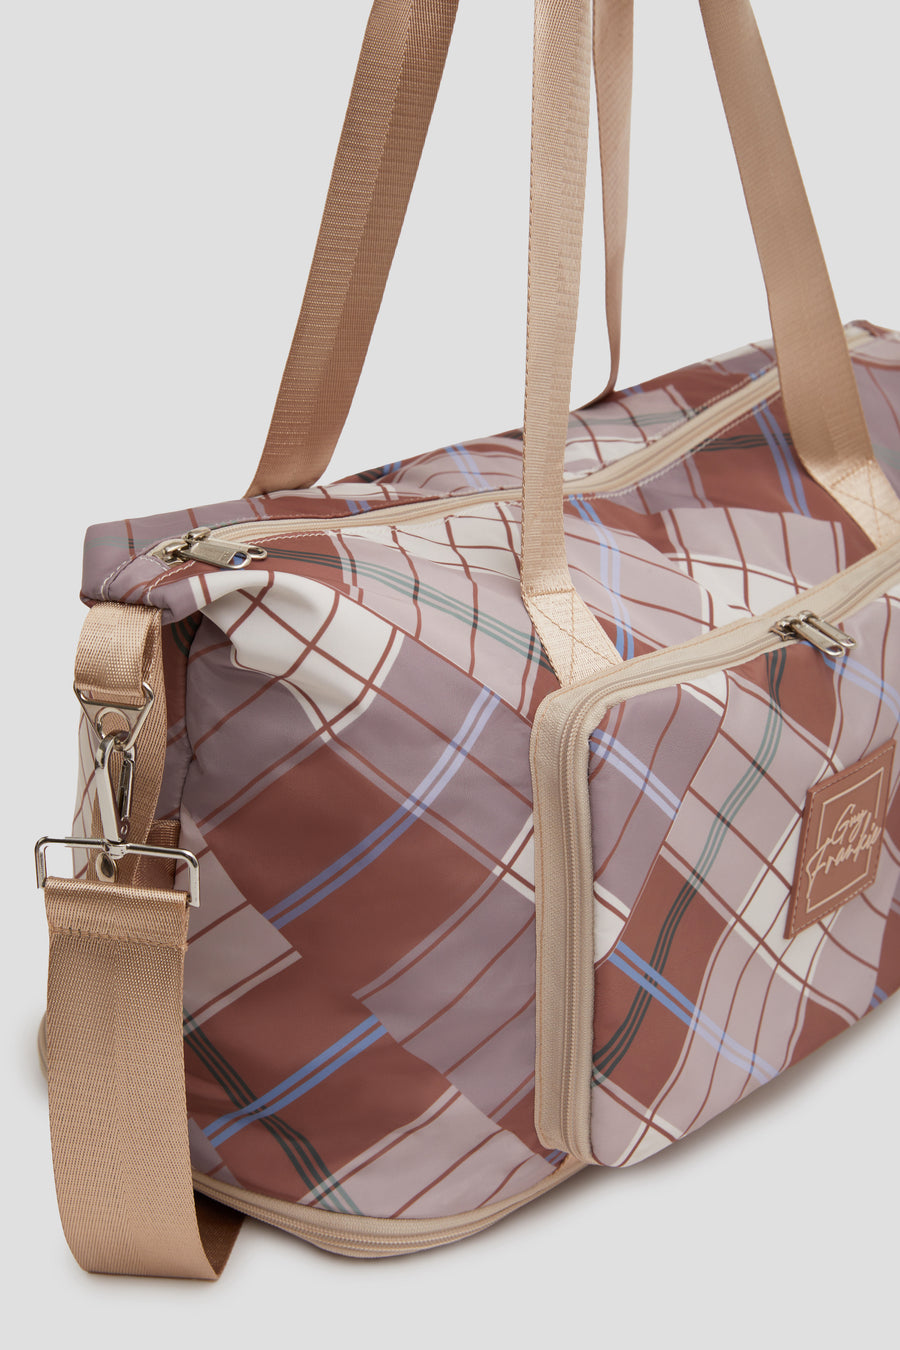 Wandf T302 Water Resistant Nylon Travel Duffel Bag for SALE